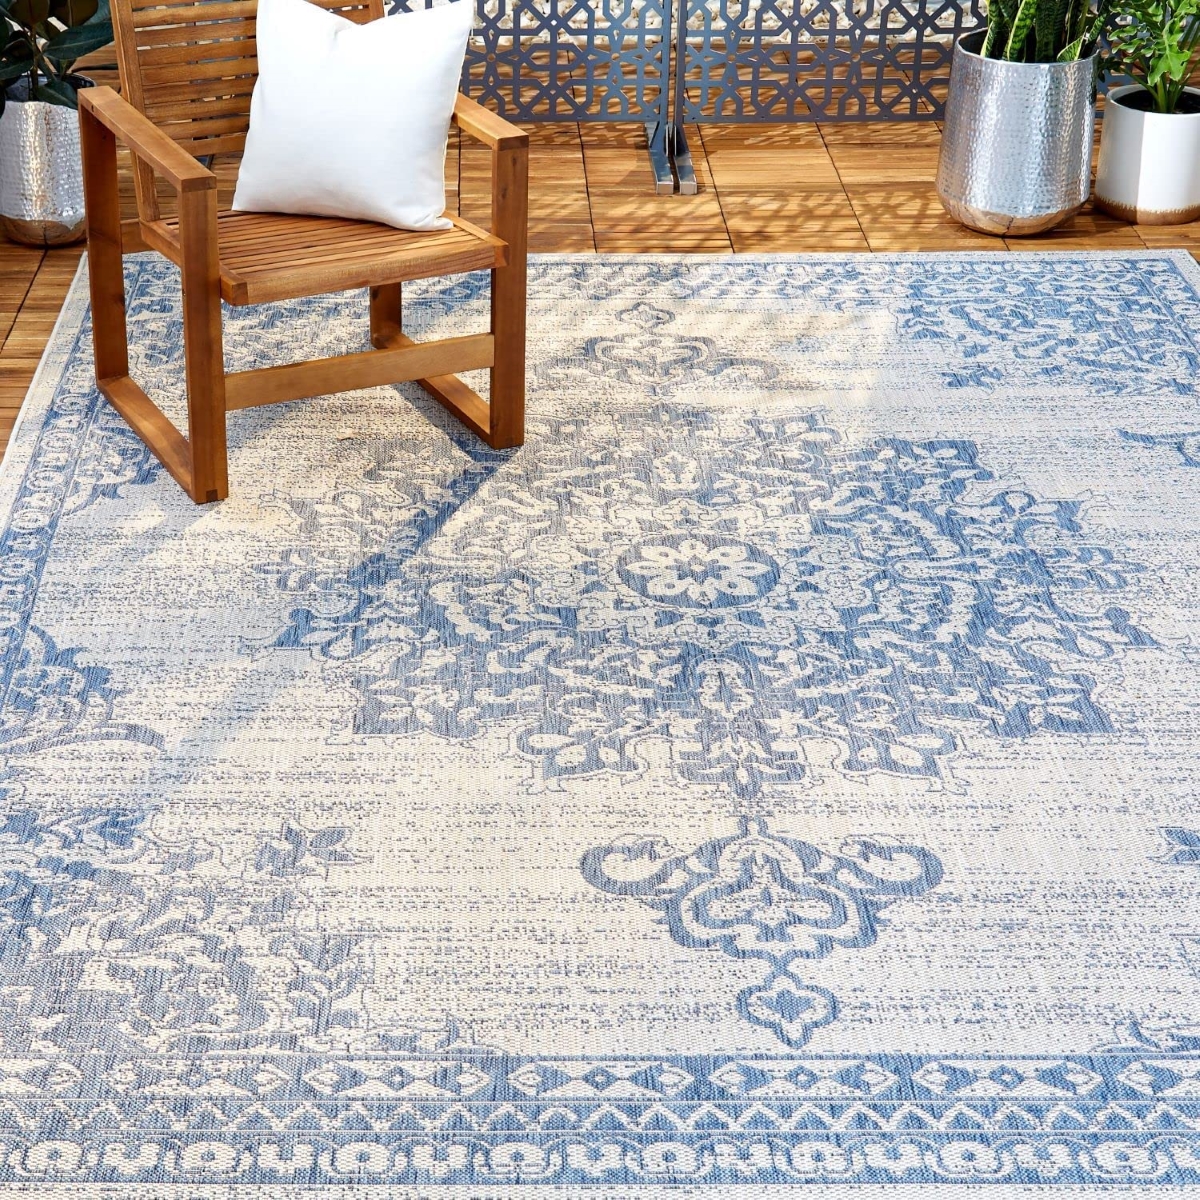 types of rugs - blue design rug